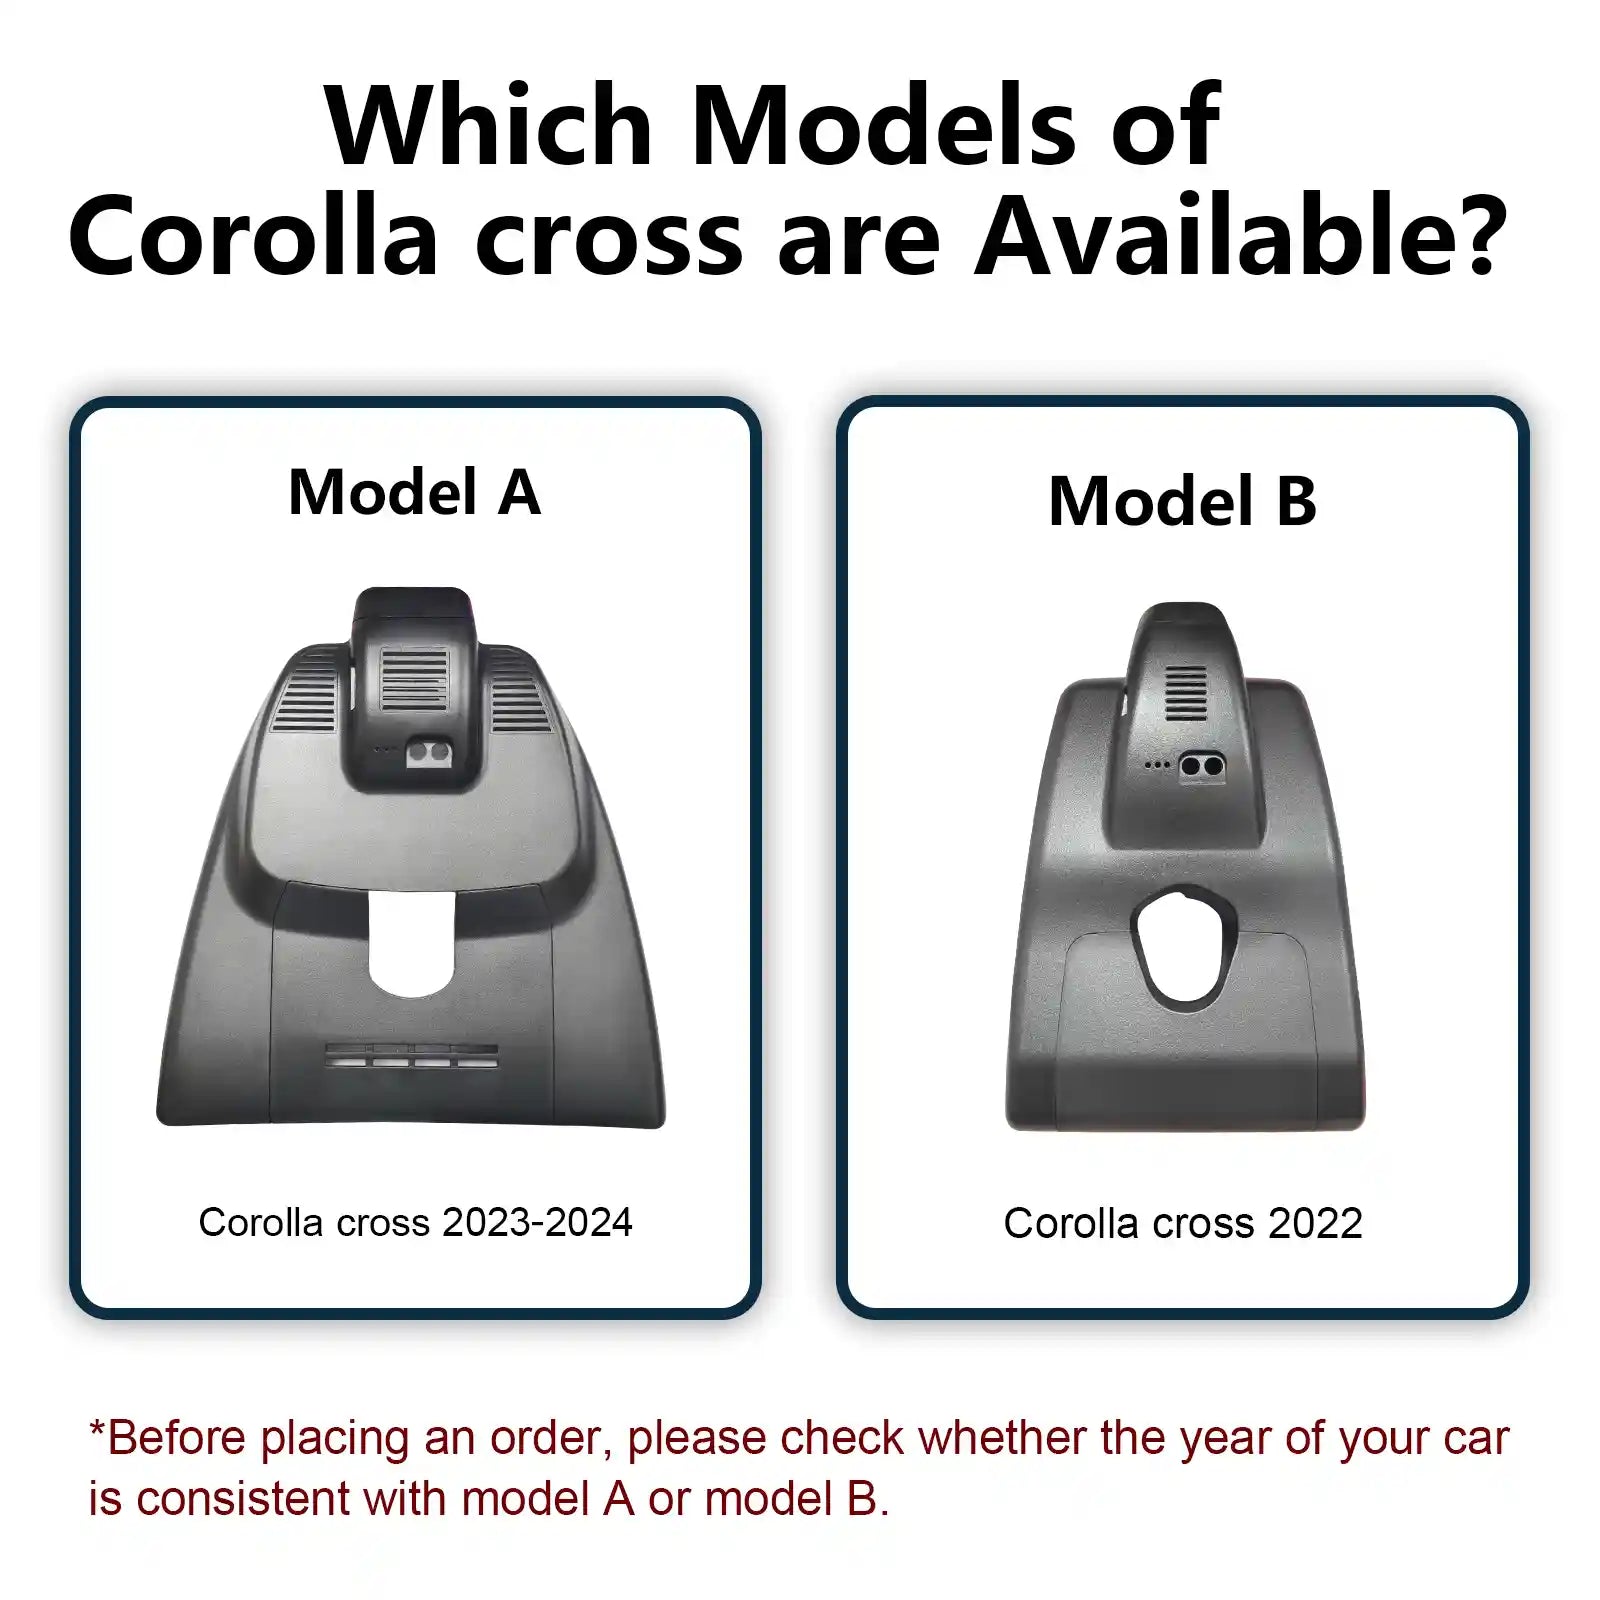 Mangoal 4K Dash Cam Custom fit for Toyota Corolla Cross 2023 2024 (Model A), LE L XLE, OEM Factory Look, 2160P UHD Video, Built-in WiFi & APP, Loop Recording, G-Sensor, Easy to Use,128GB Card